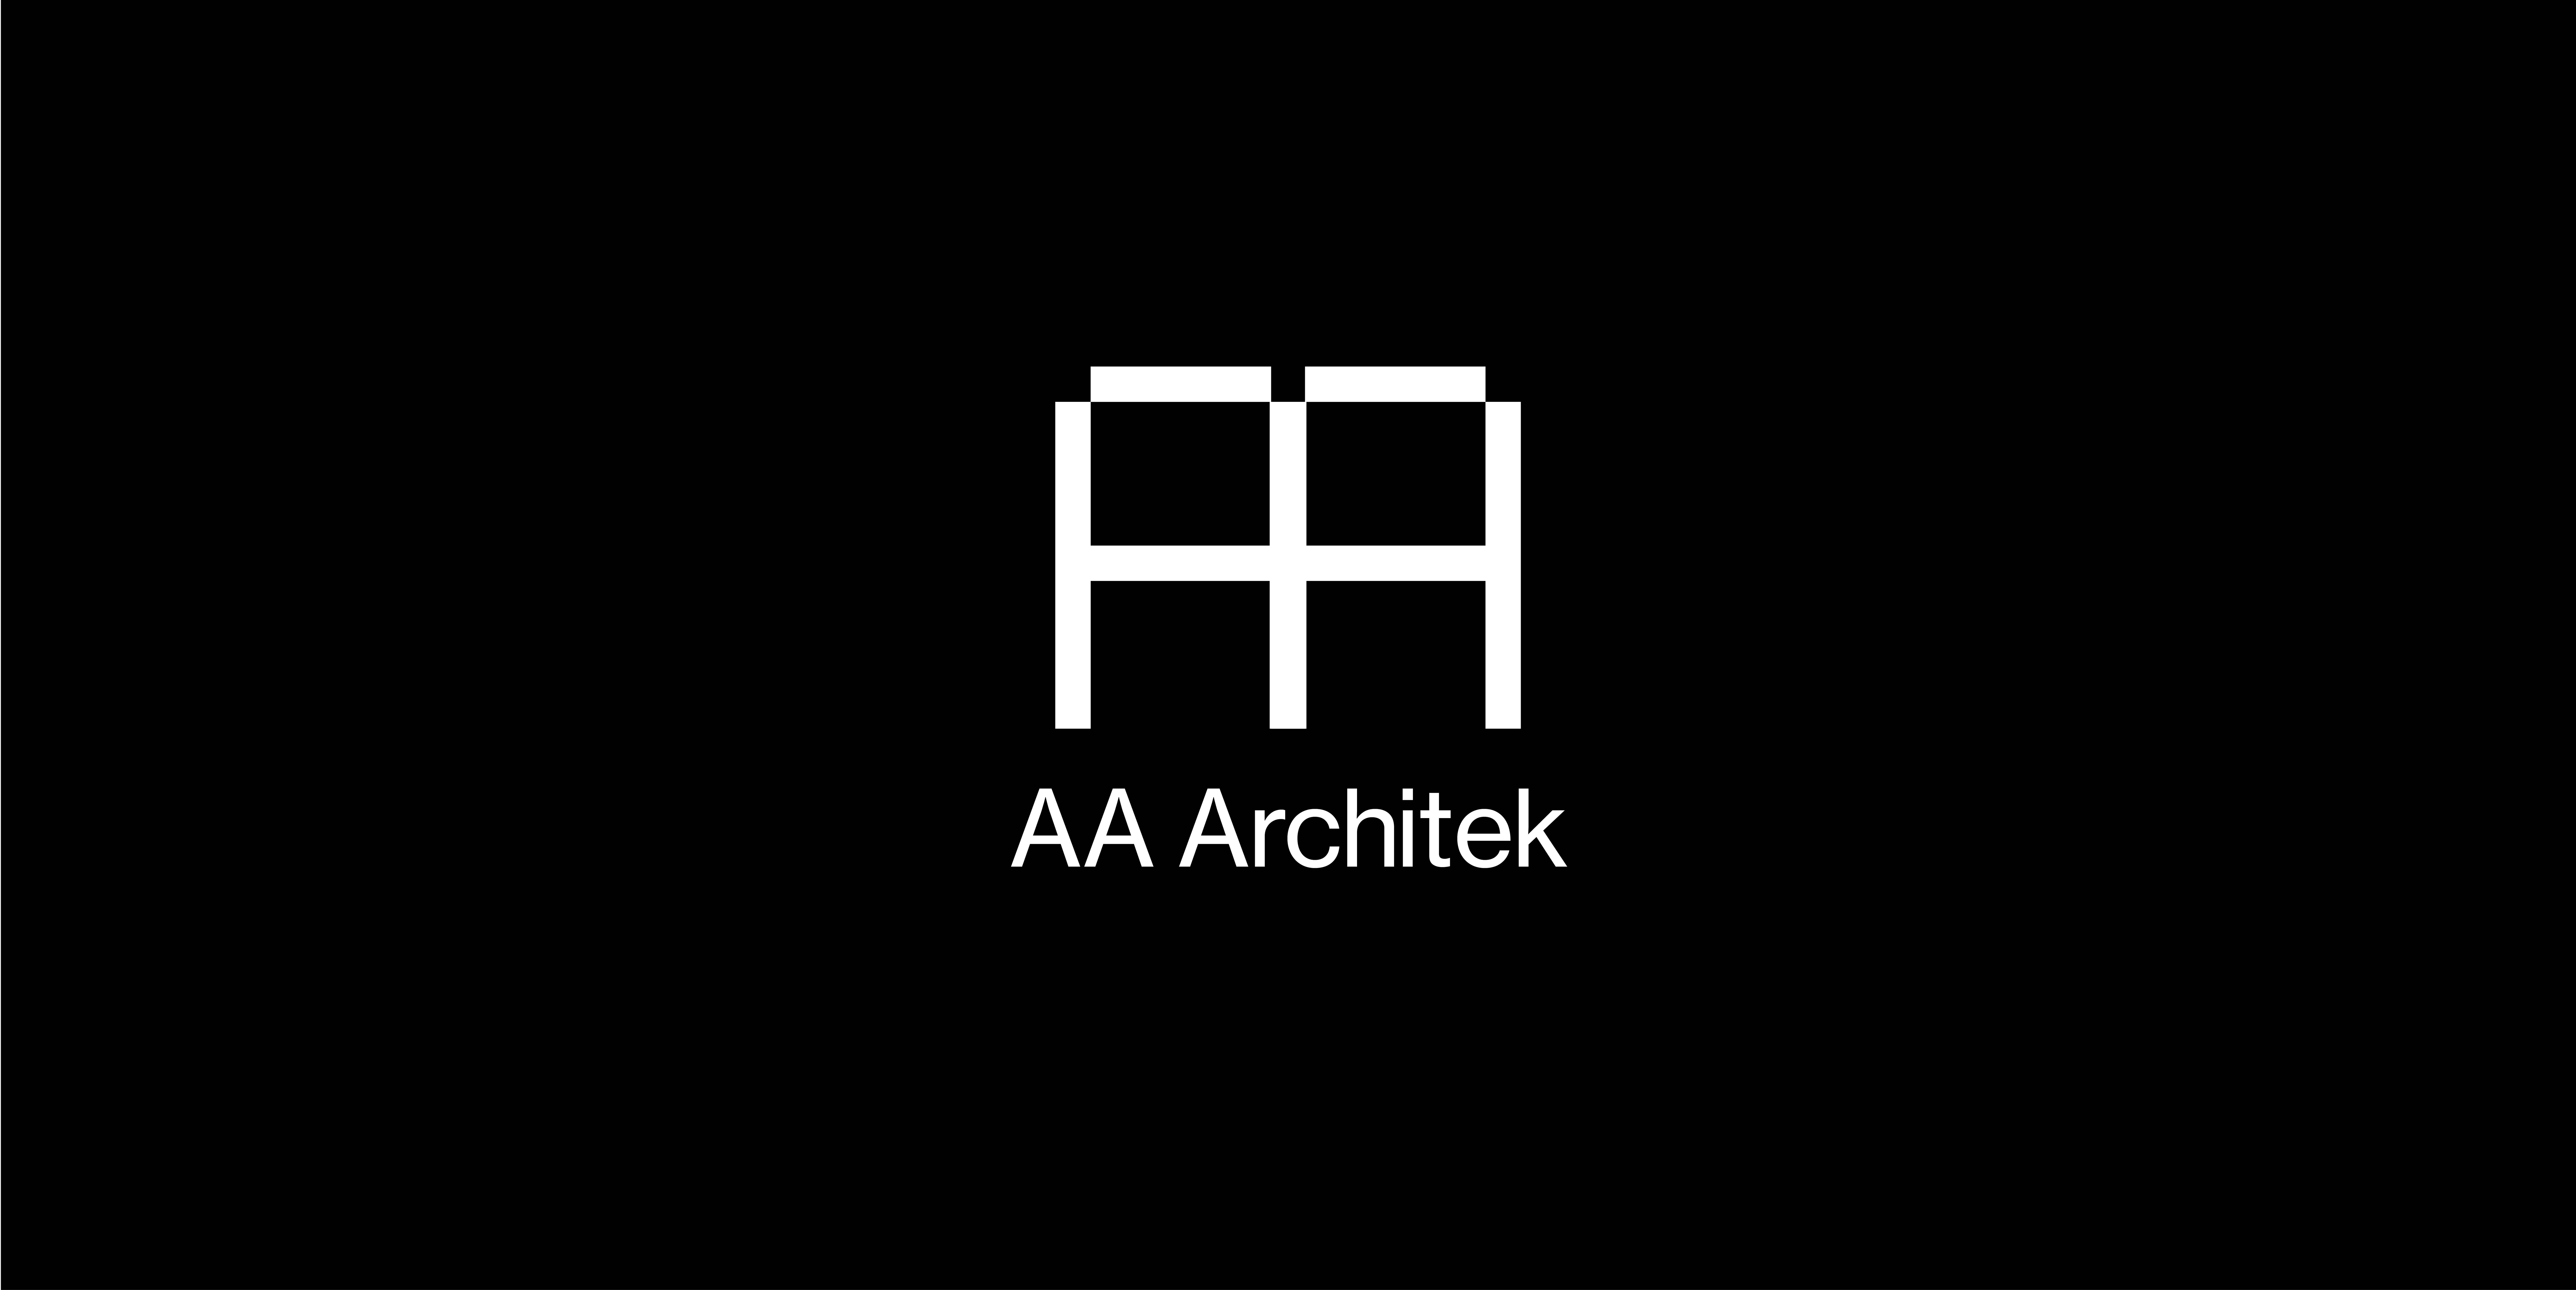 AA Architek Brand Identity by Vu Huy